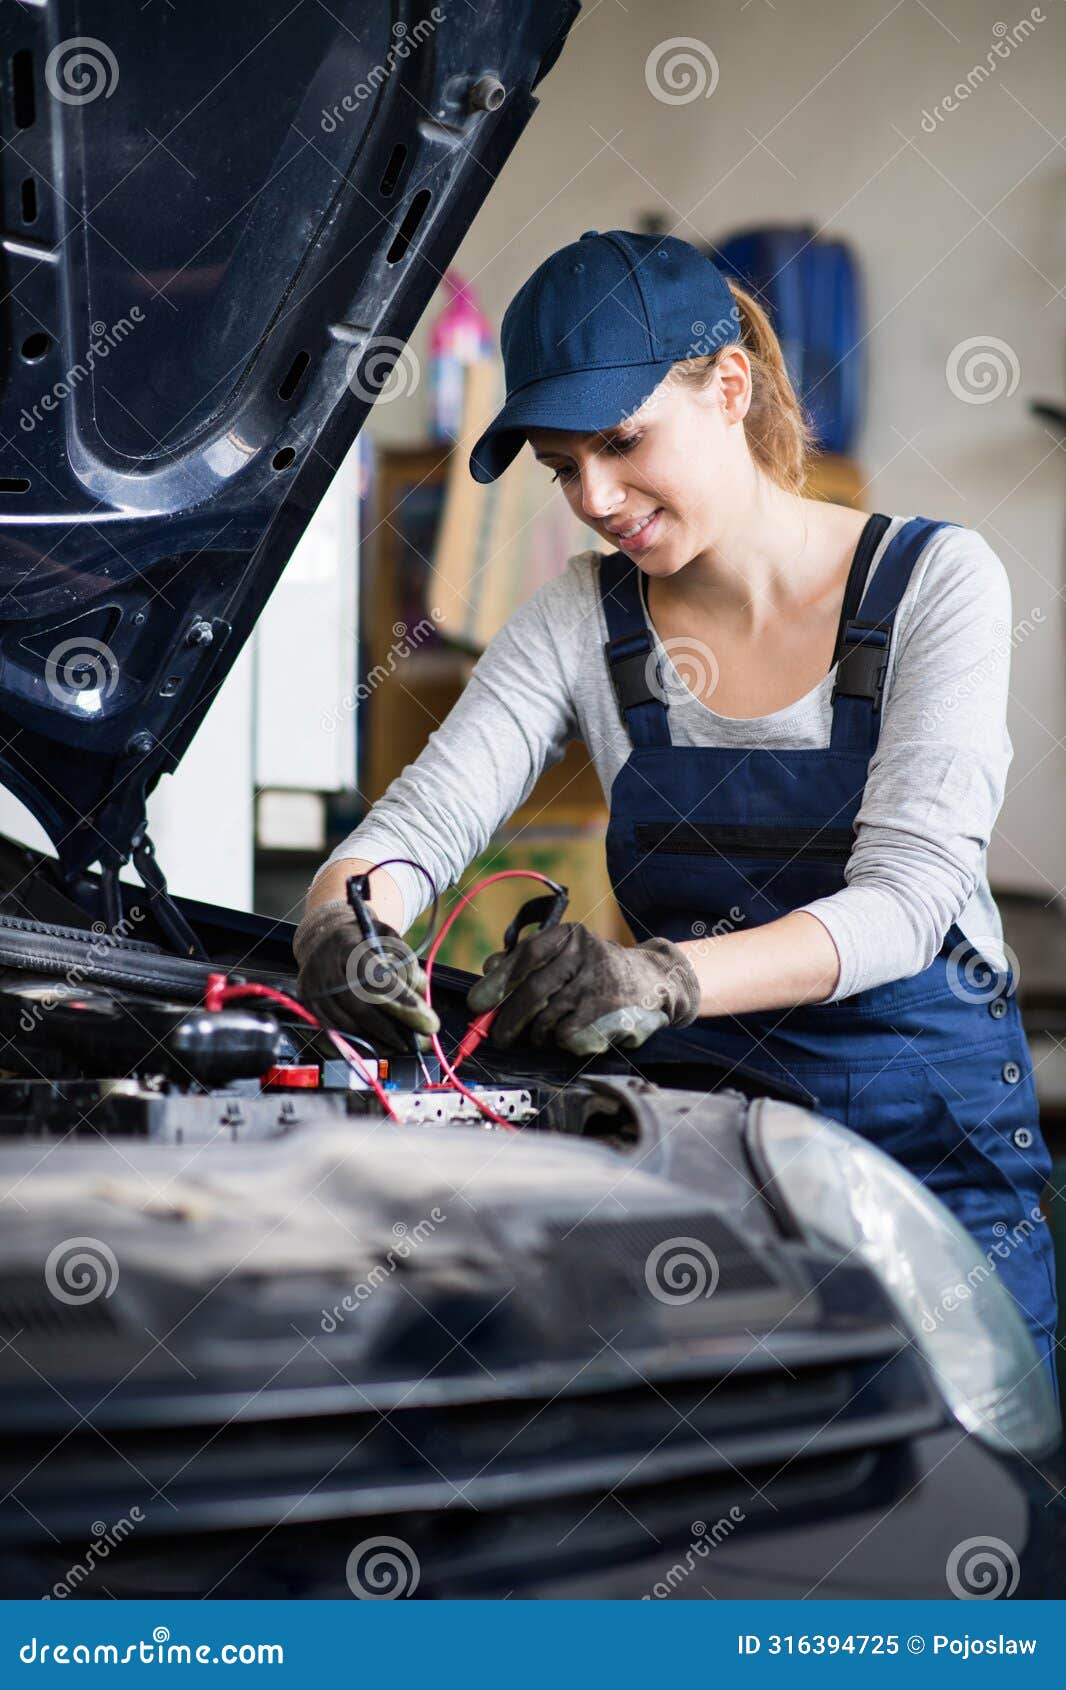 female auto mechanic repairing, maintaining car, car battery. beautiful woman working in a garage, wearing blue